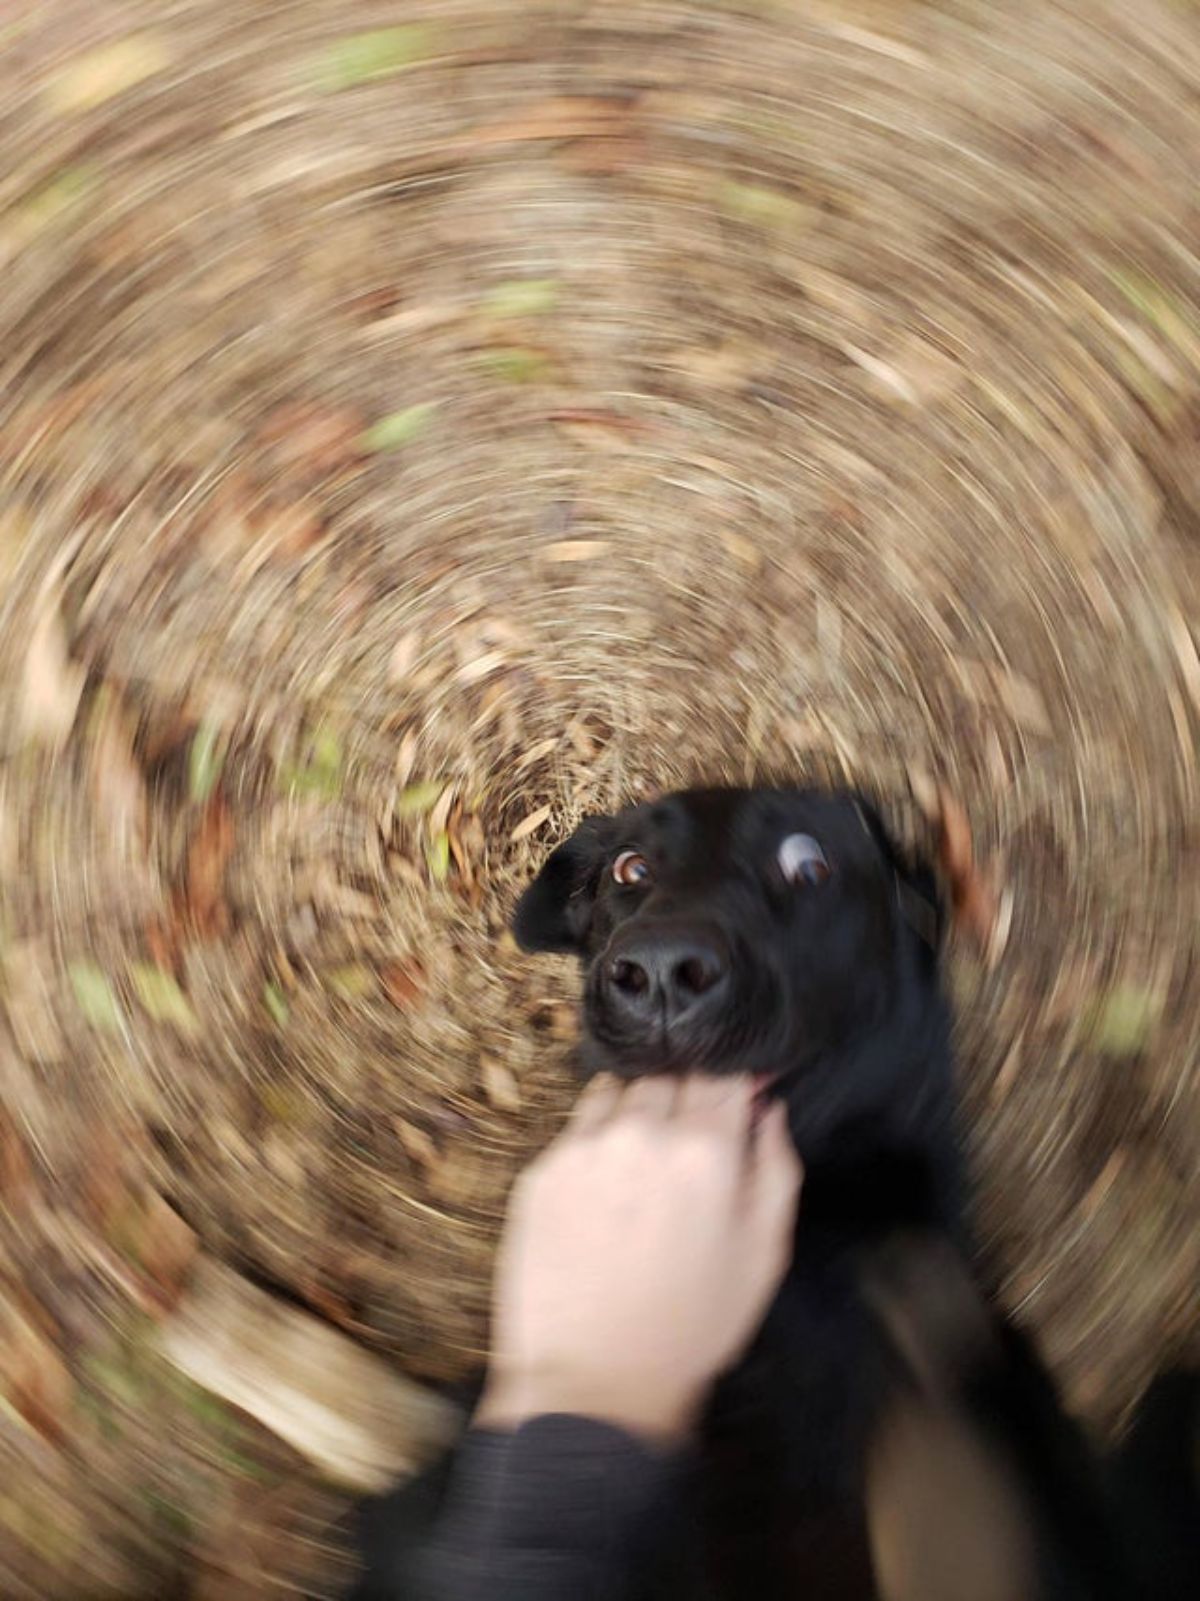 black dog biting a hand with a circular brown blur behind the dog